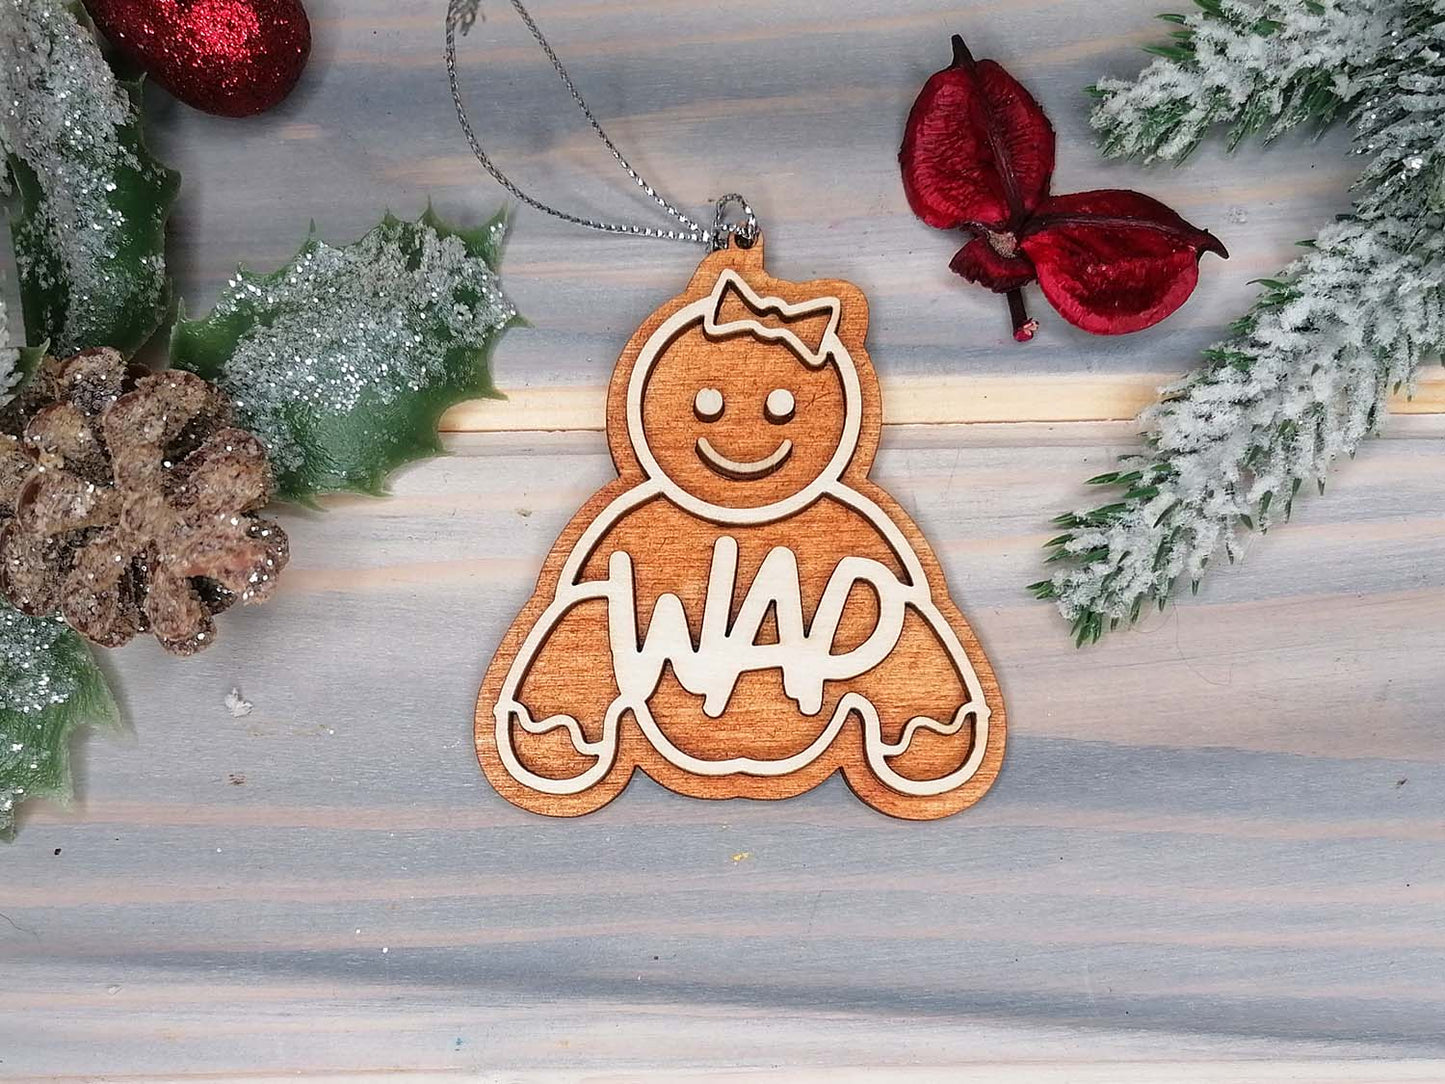 WAP Naughty Funny Gingerbread Christmas Decoration